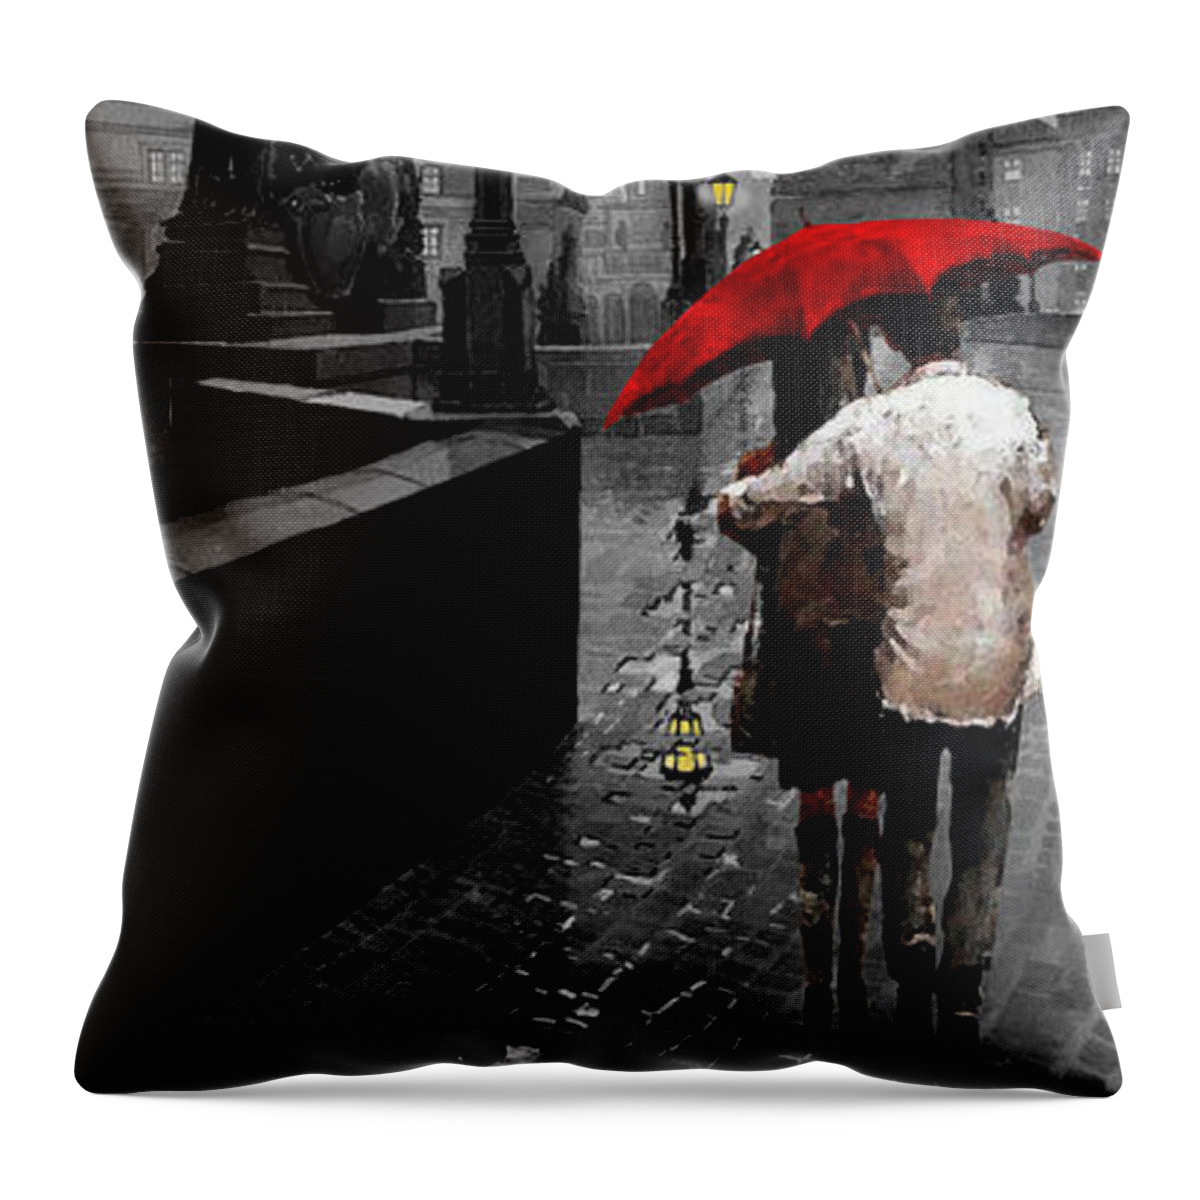 Mix Media Throw Pillow featuring the mixed media Red Umbrella 2 by Yuriy Shevchuk